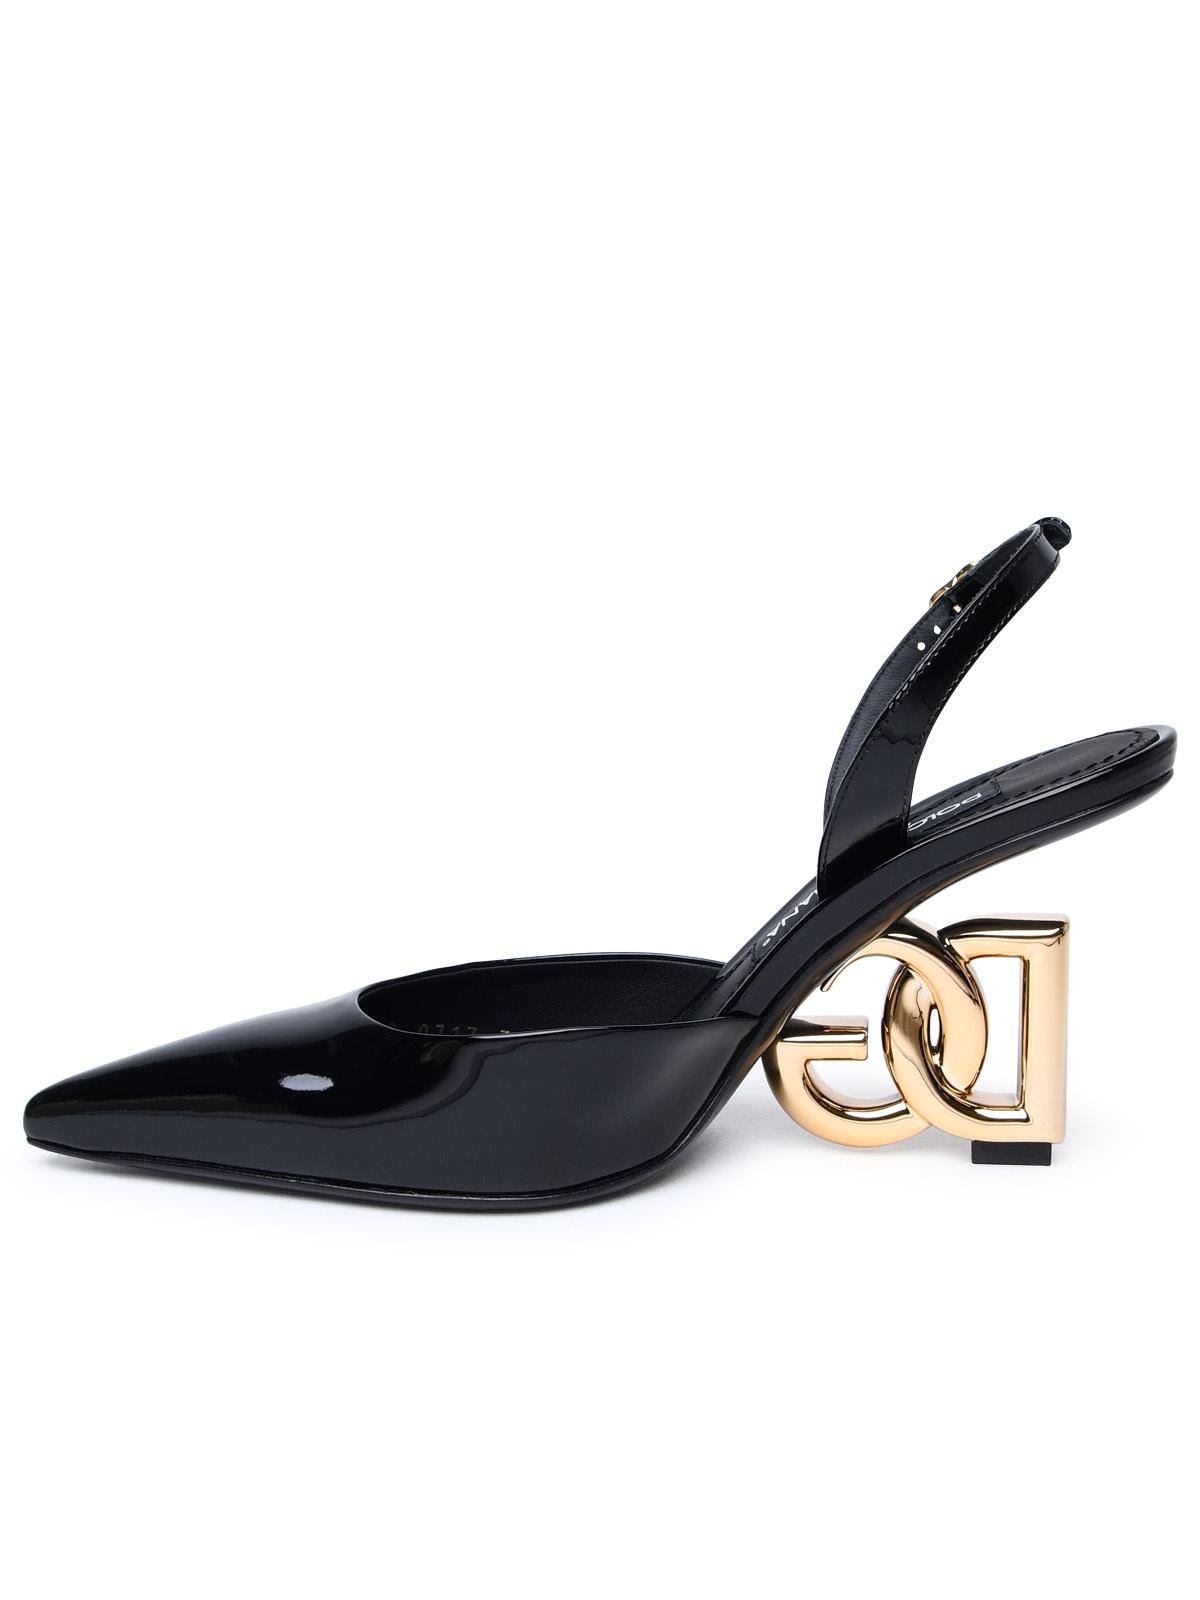 Dolce & Gabbana Black Patent Leather Pumps Woman - 3